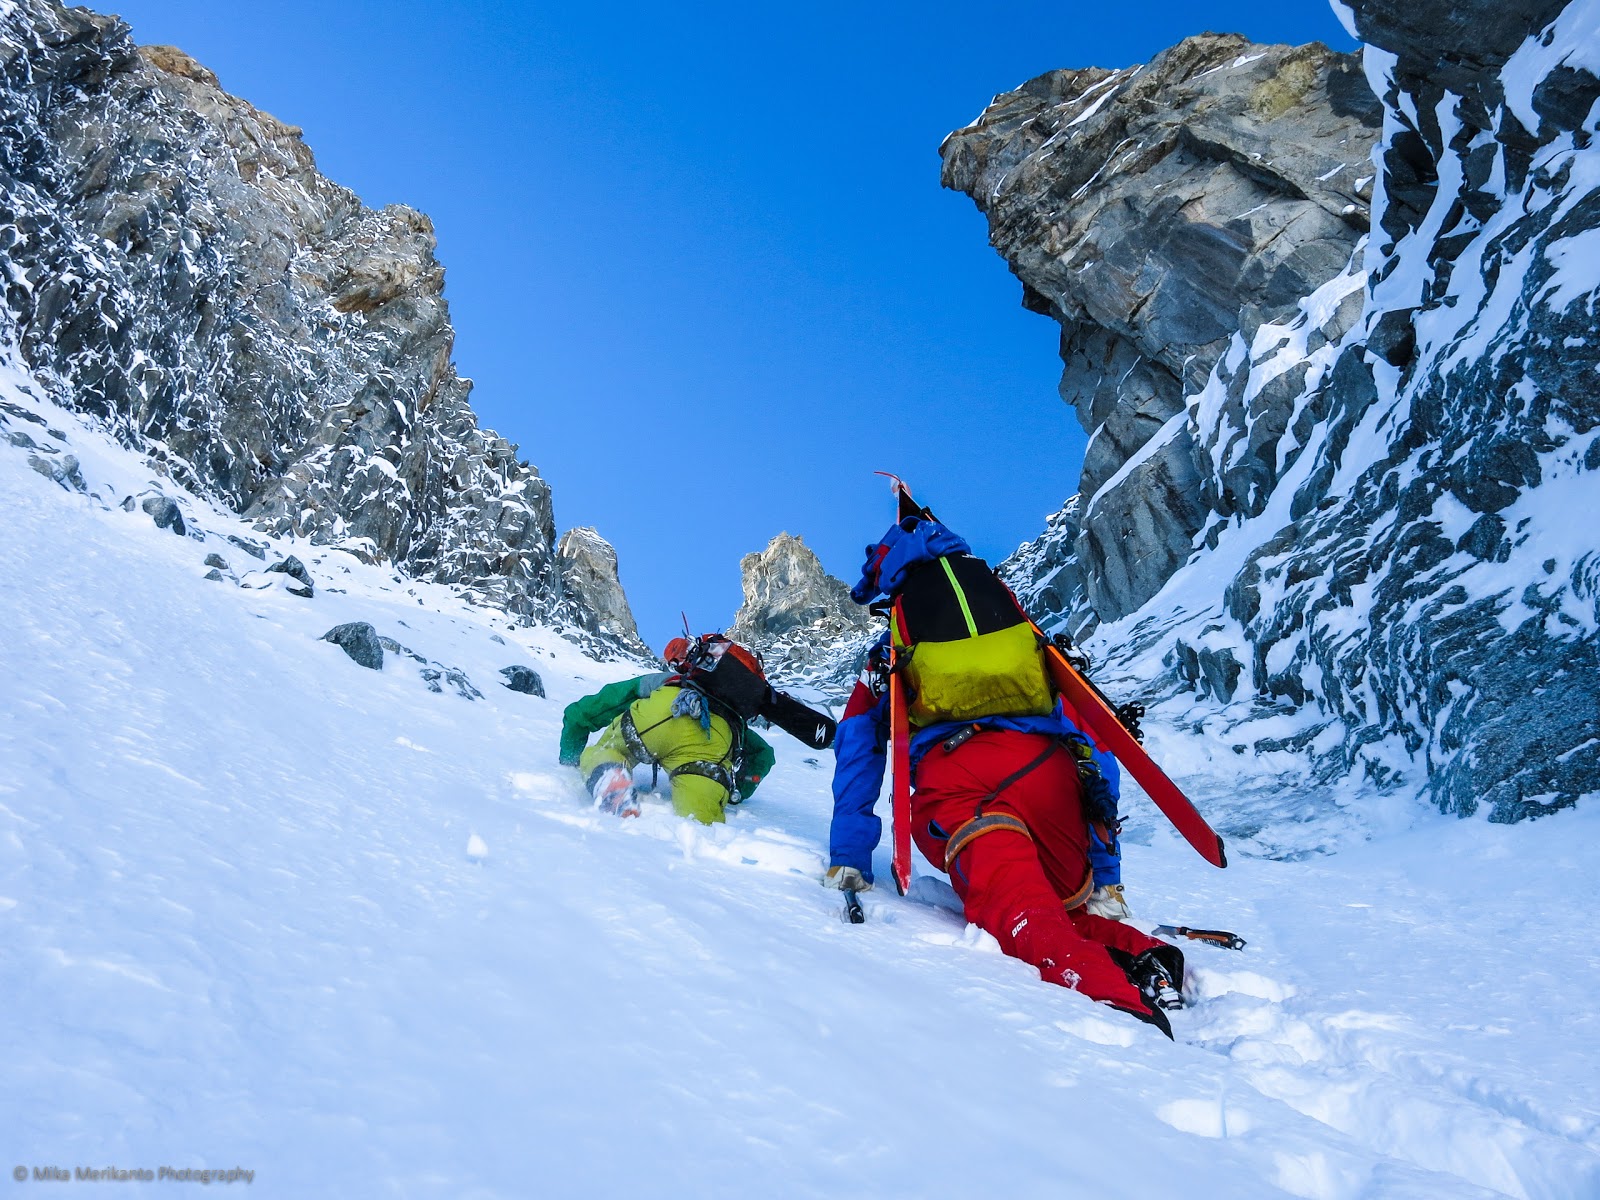 Ski-mountaineering and photography: Adventure skiing